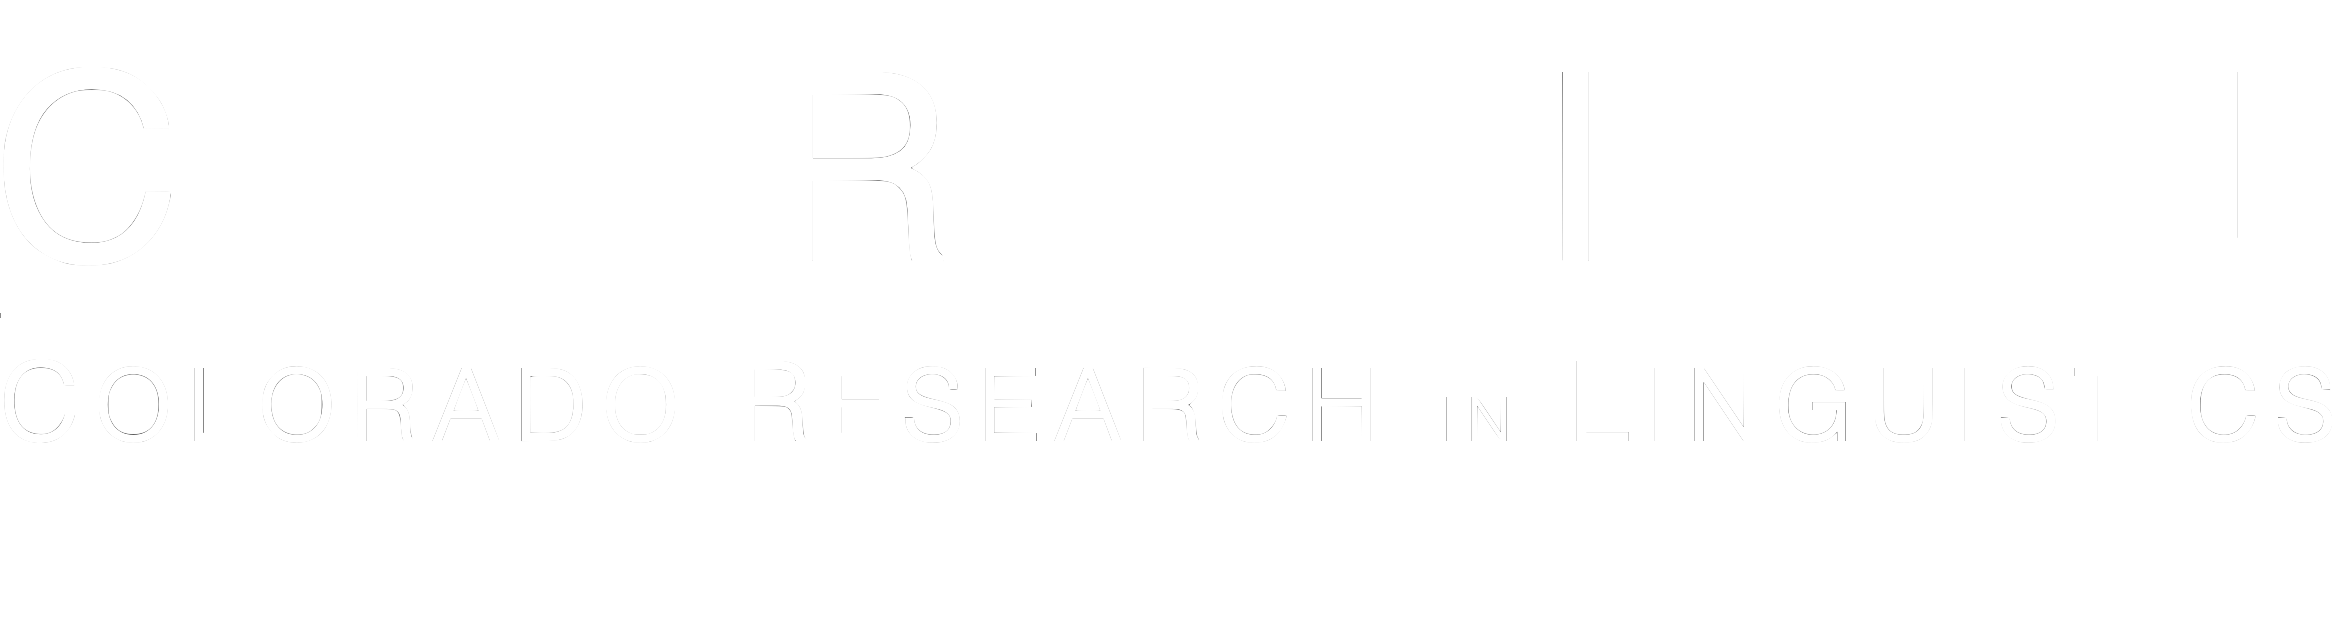 Colorado Research in Linguistics logo